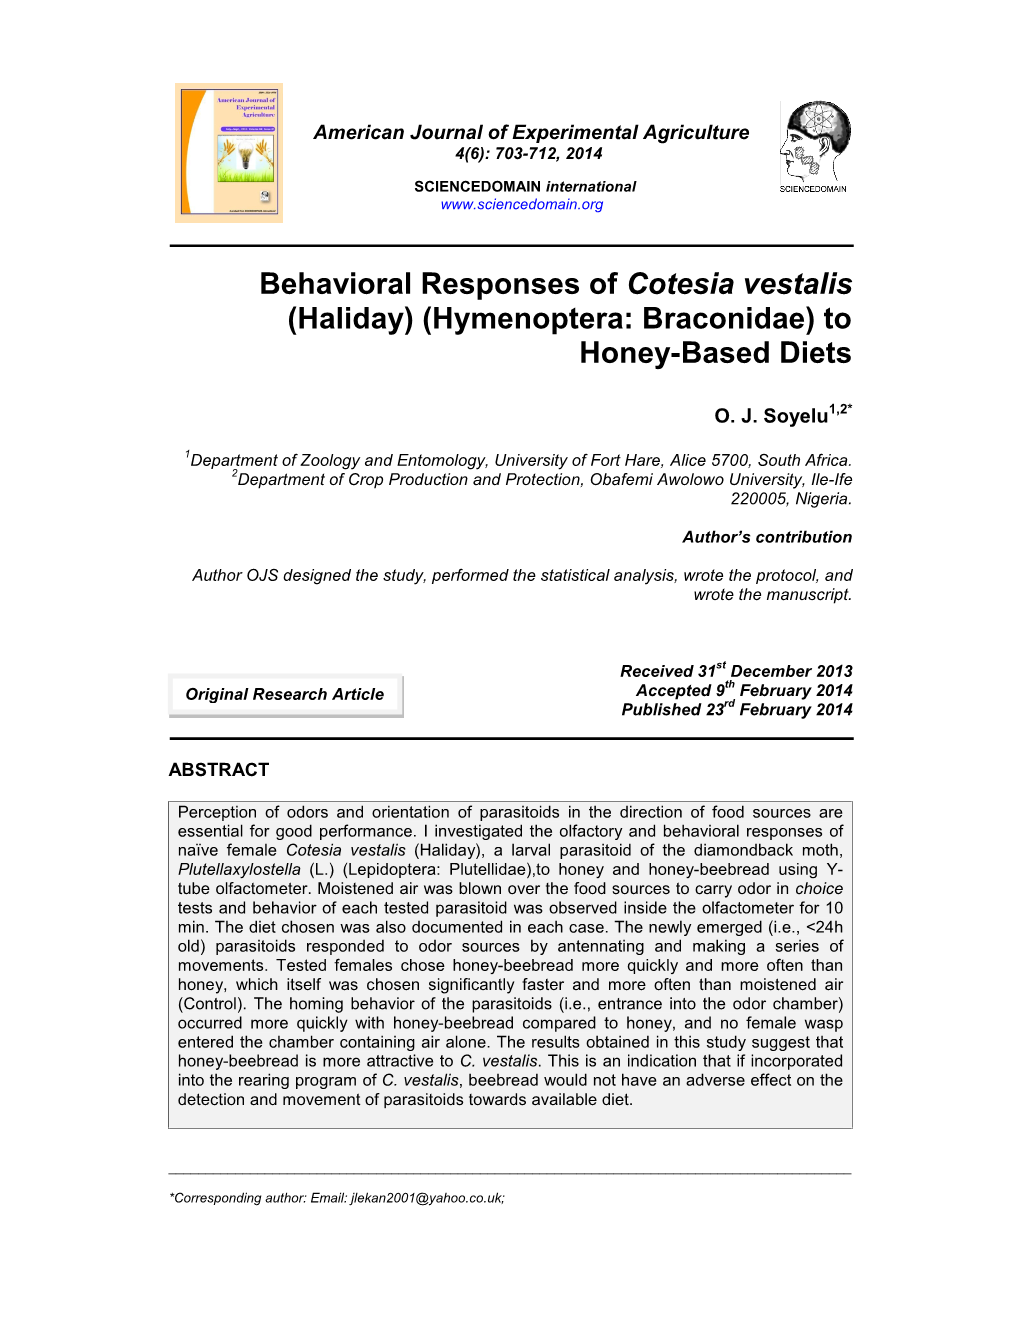 Behavioral Responses of Cotesia Vestalis (Haliday) (Hymenoptera: Braconidae) to Honey-Based Diets